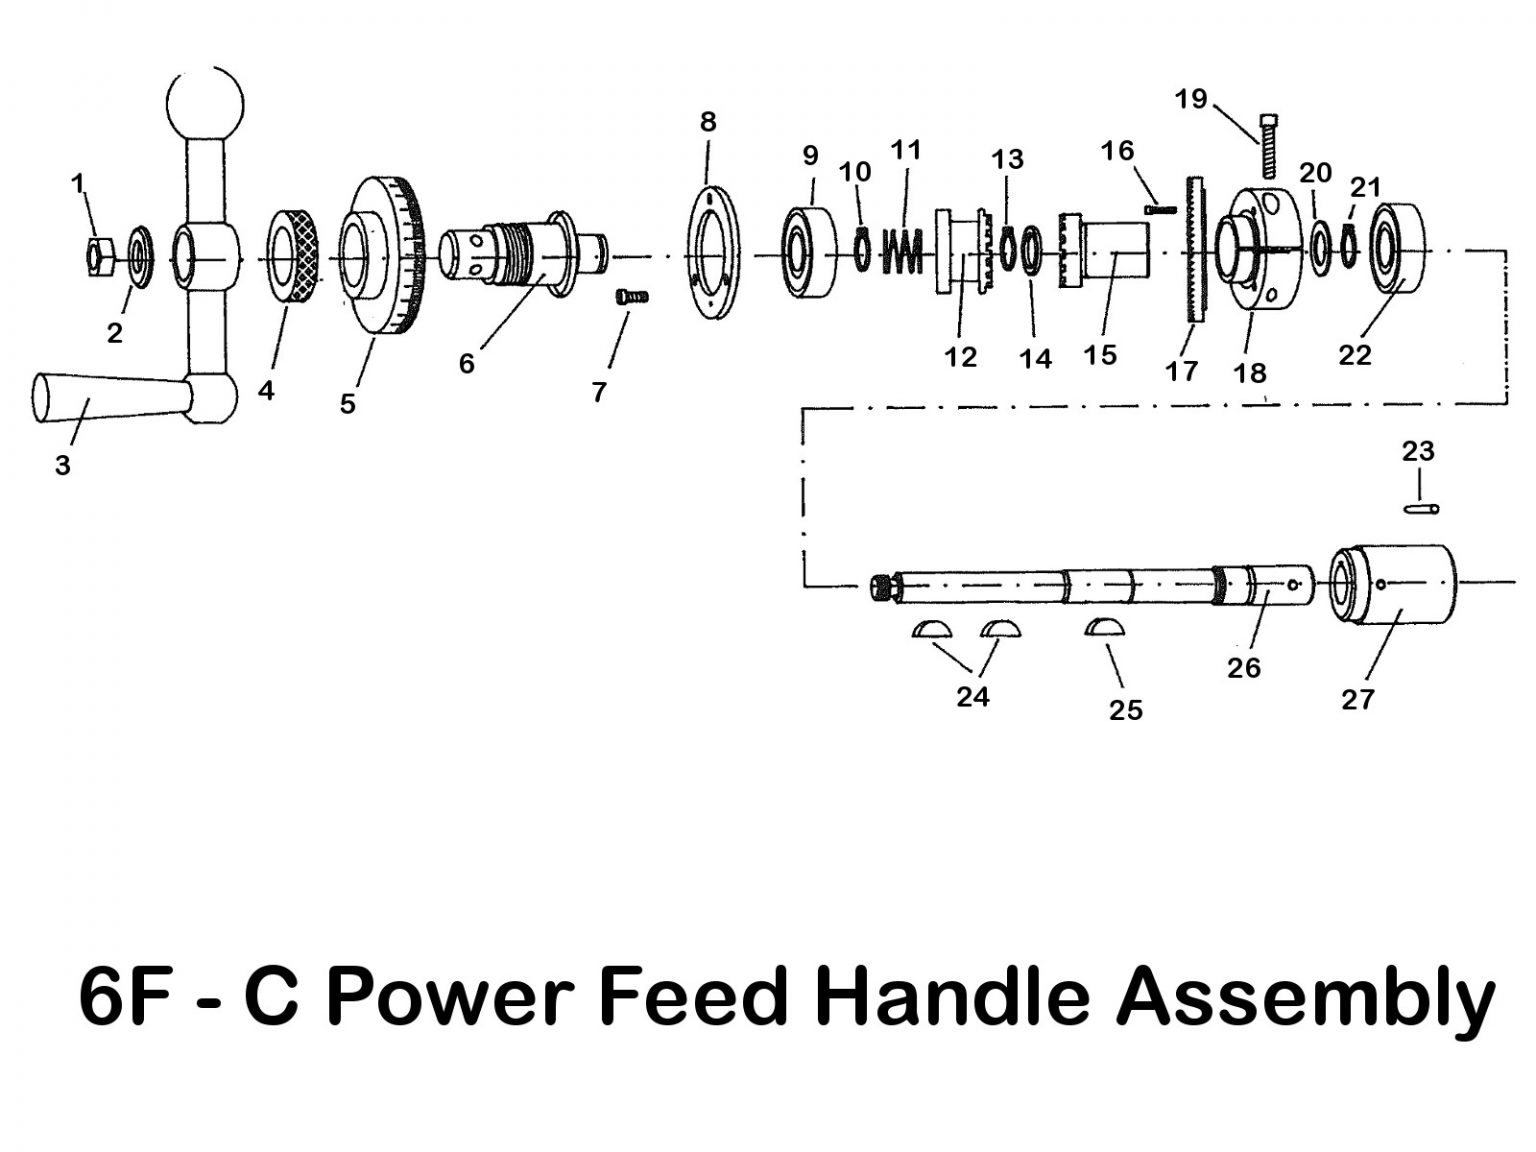 6F-C Power Feed Handle Assembly Breakdown